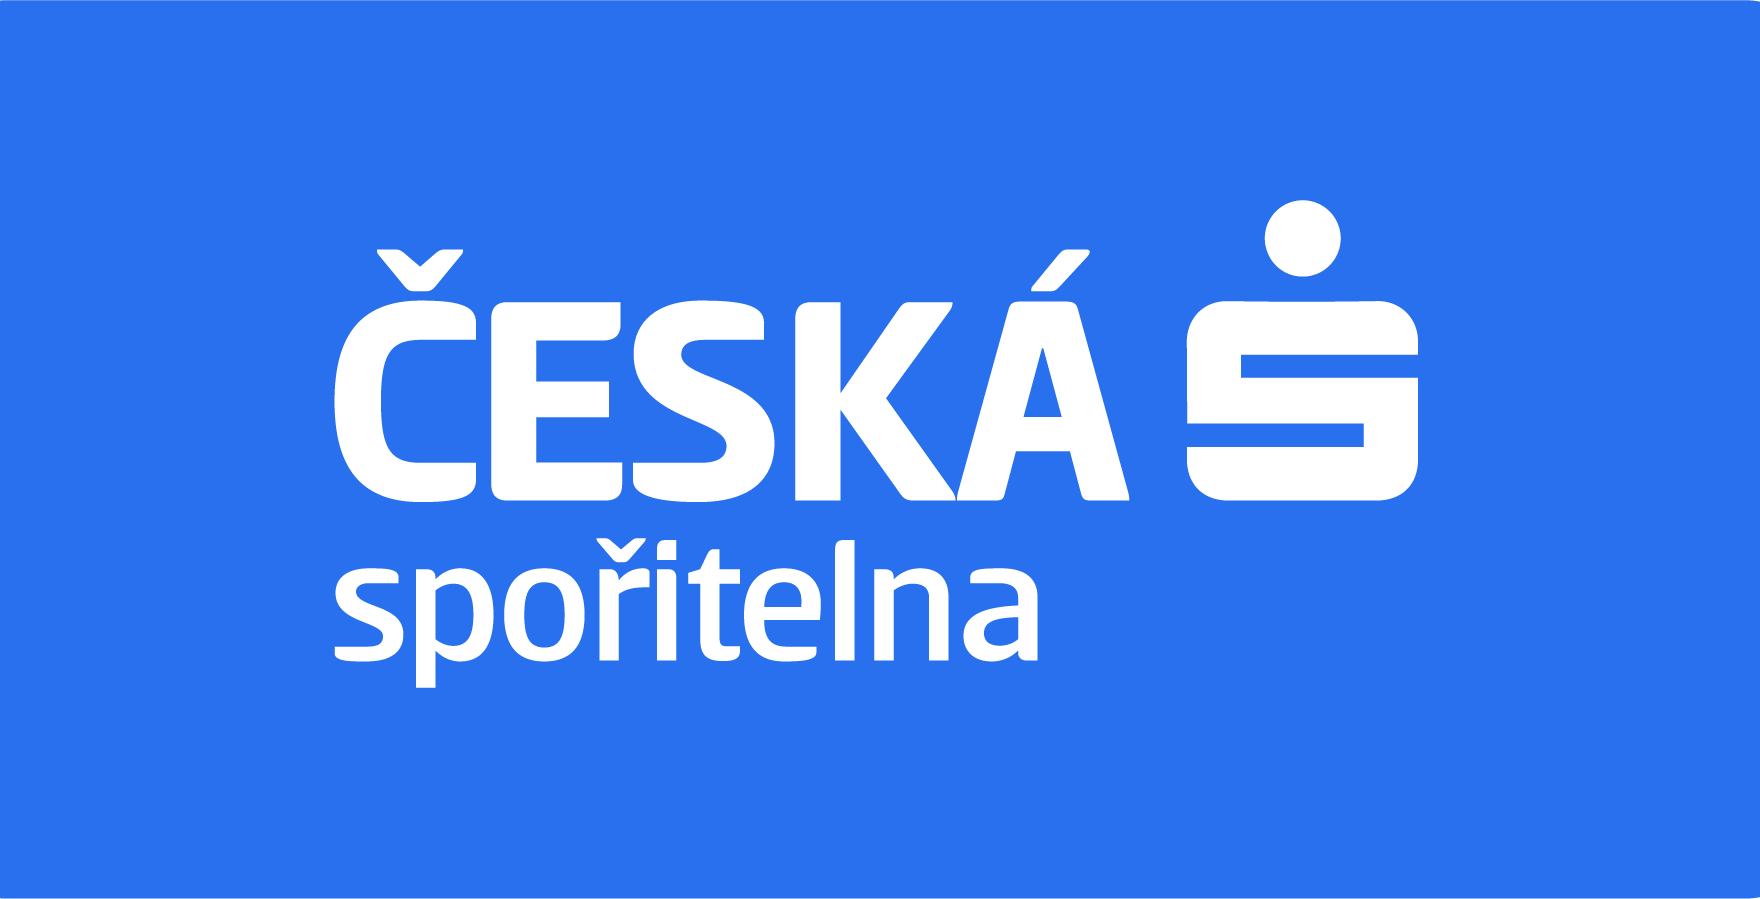 Česká spořitelna: клиенты теперь могут вести торговлю акциями, сертификатами и ETF